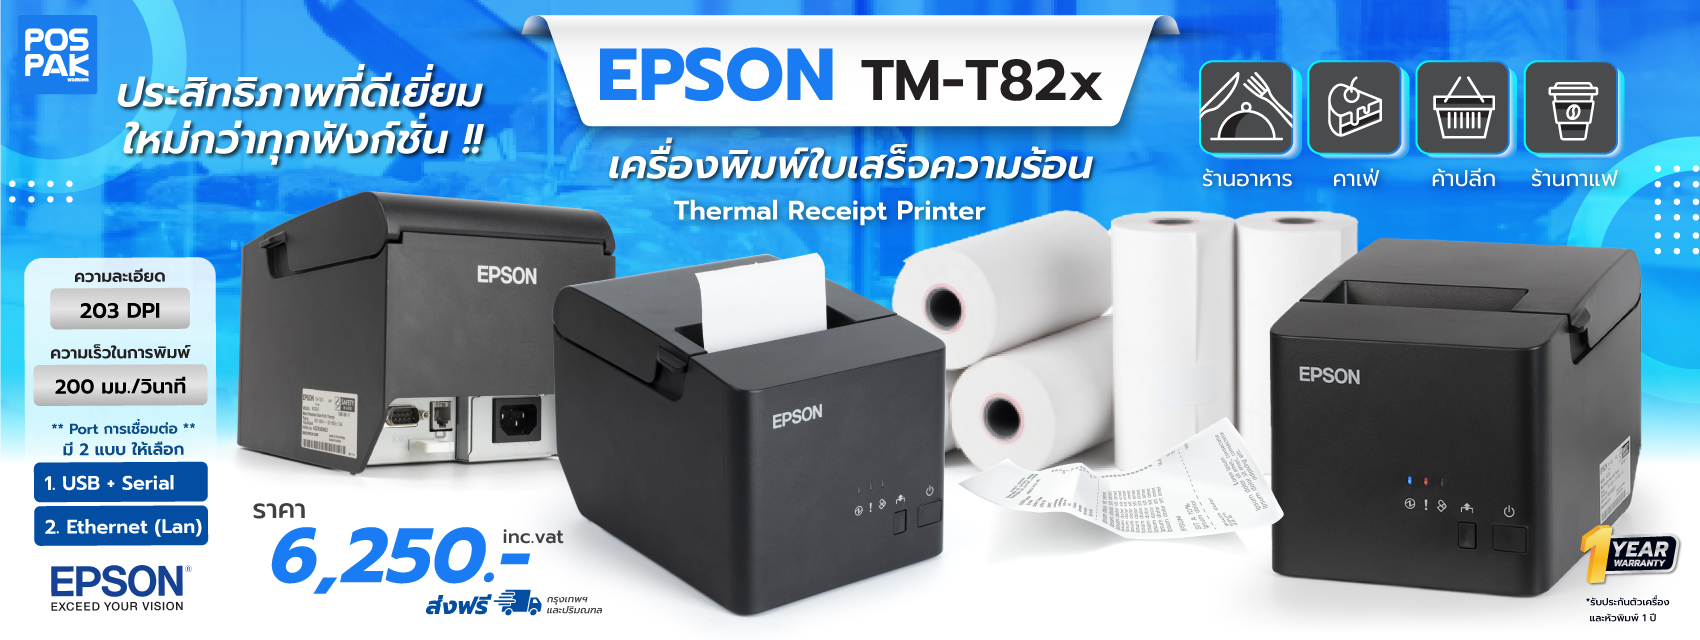 EPSON-TM-T82x-Banner-Web-ADS-850x320px-2.jpeg